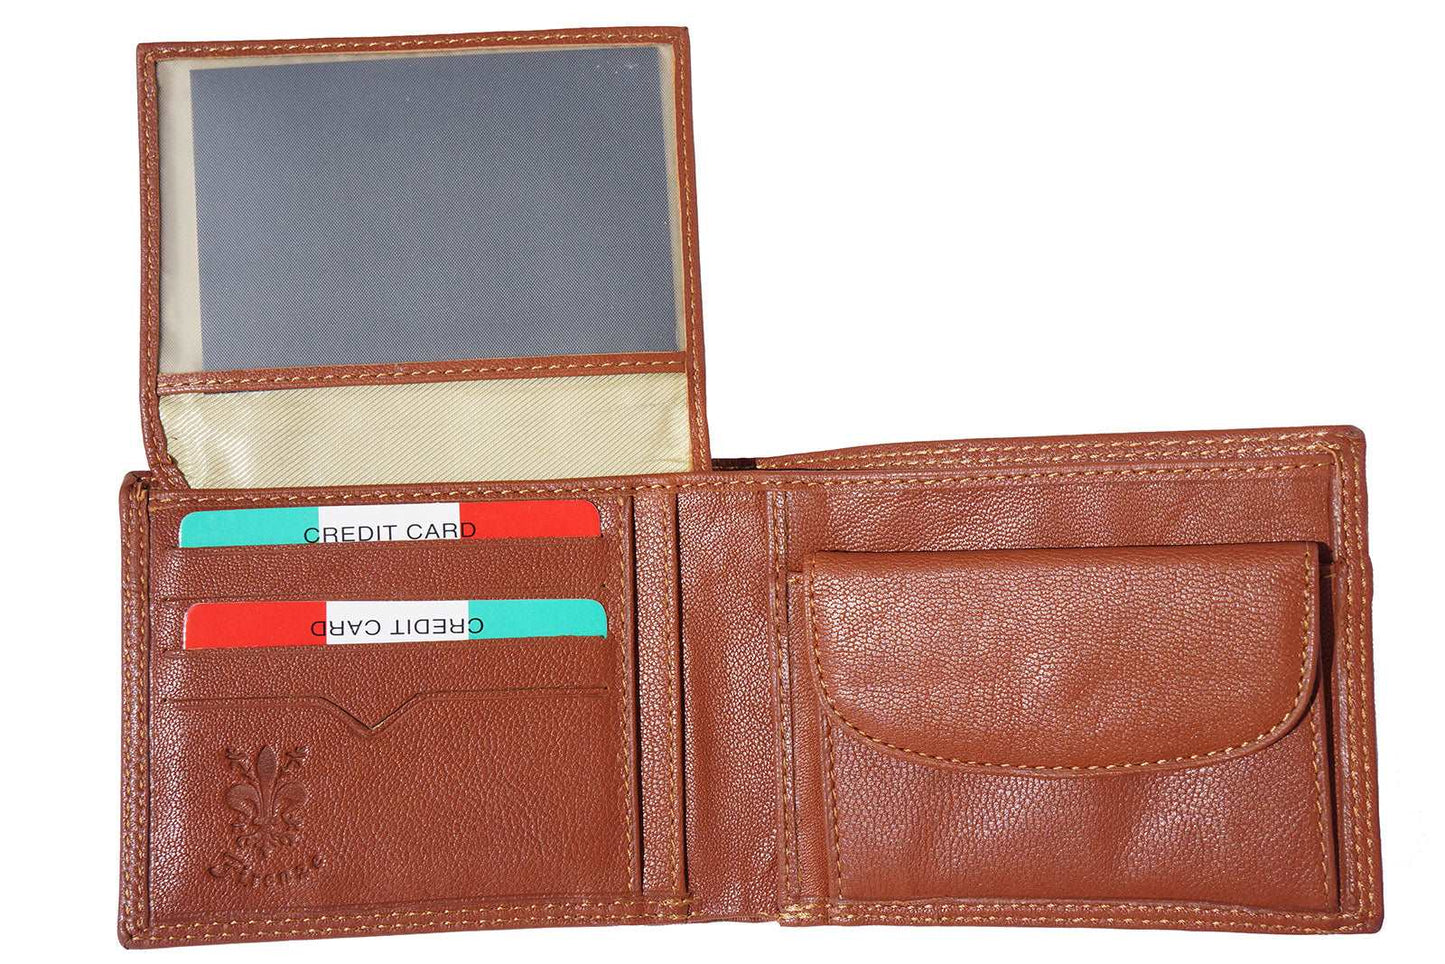 Battista Leather wallet